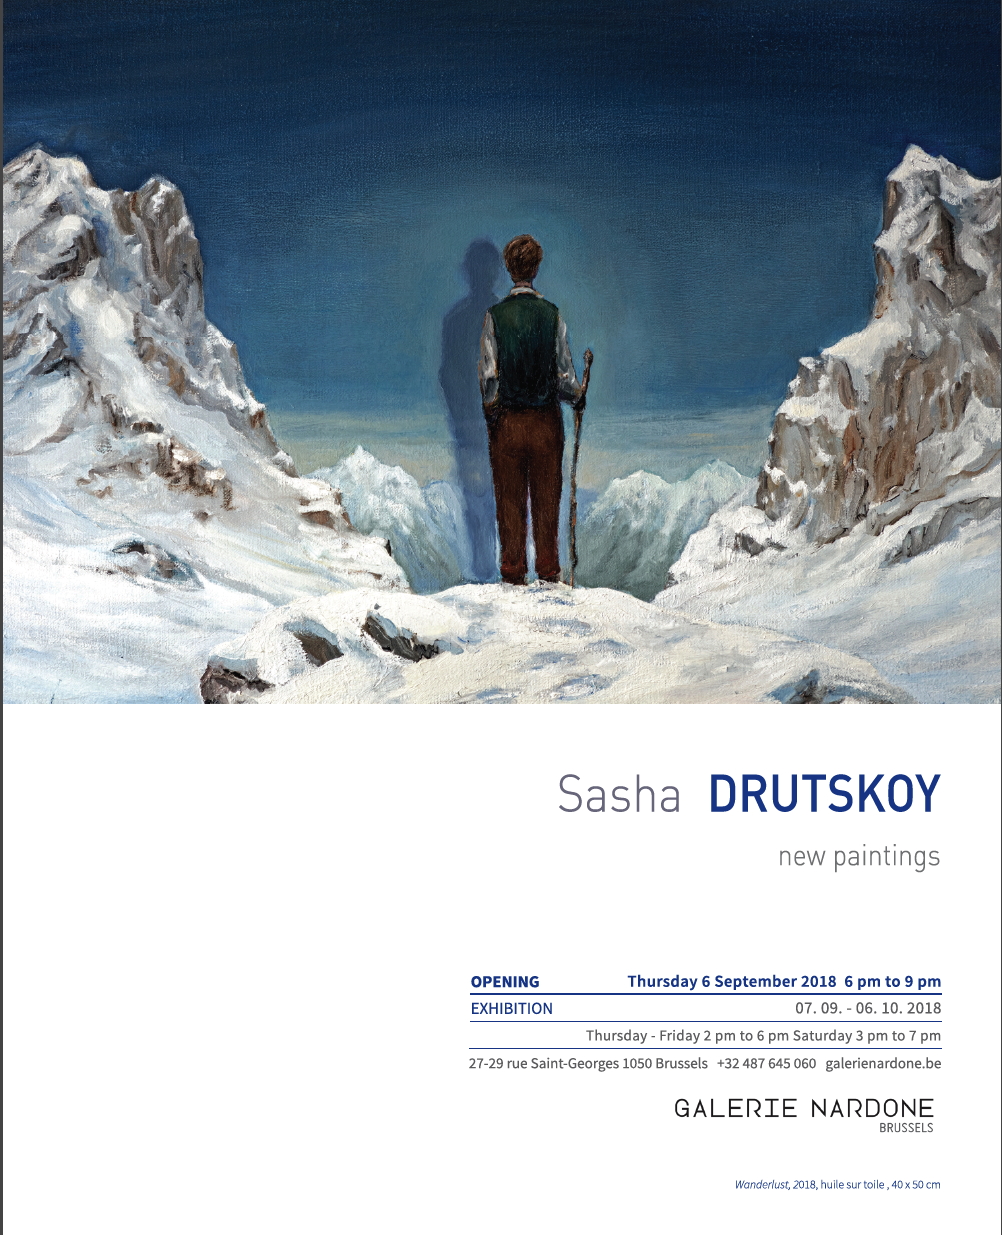 Affiche. Galerie Nardone. Sasha Drutskoy - New paintings. Wonderlust, 2018, huile sur toile, 40x50 cm. 2018-09-06